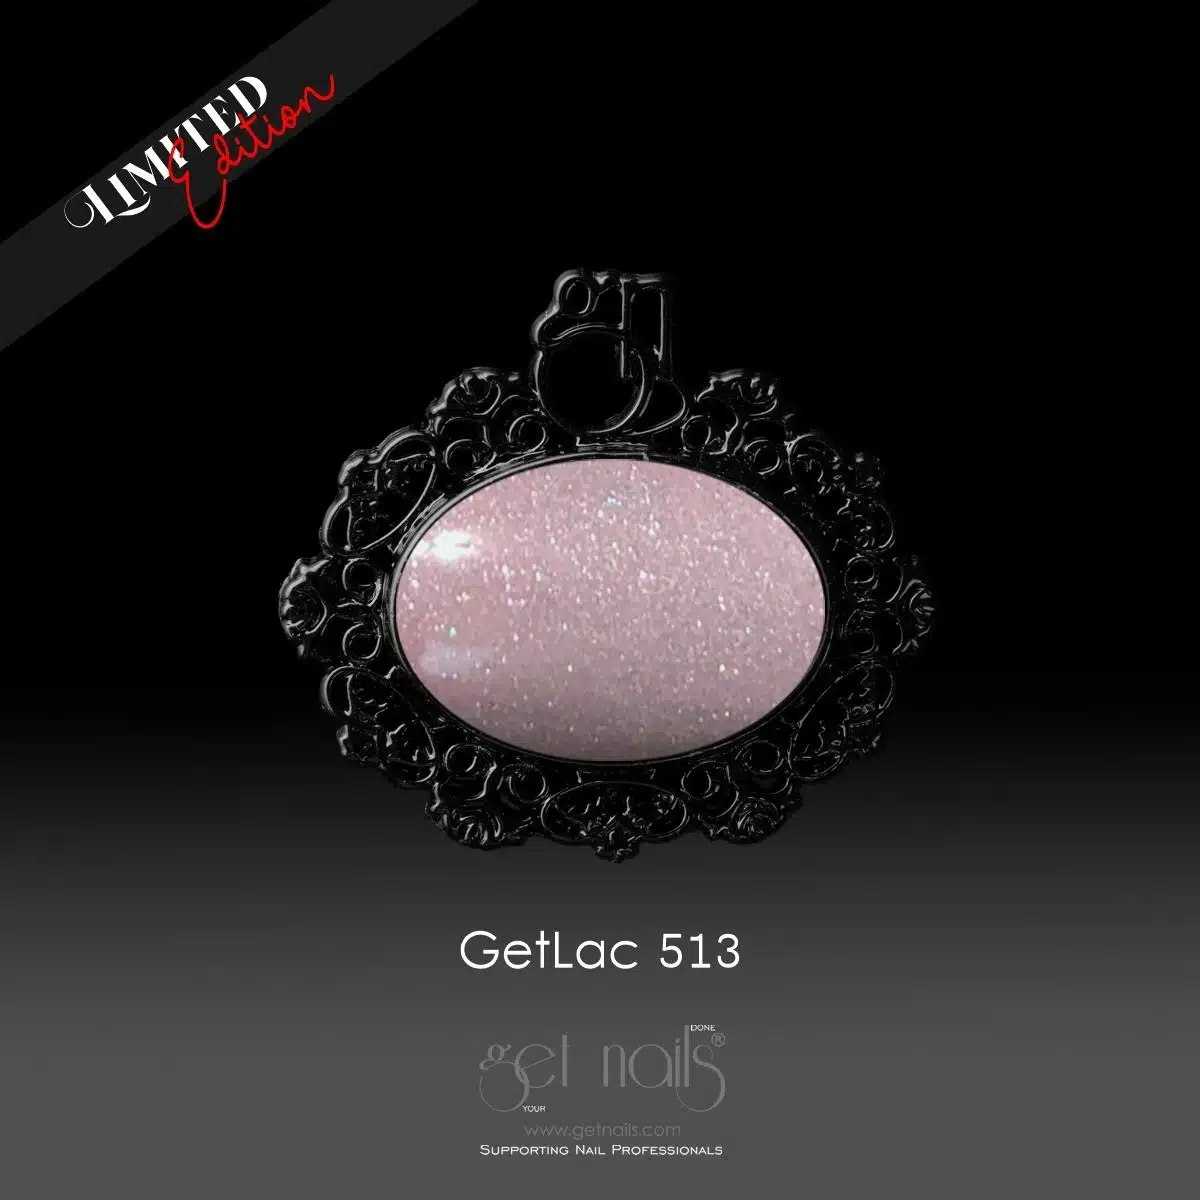 Get Nails Austria - GetLac 513 15 g